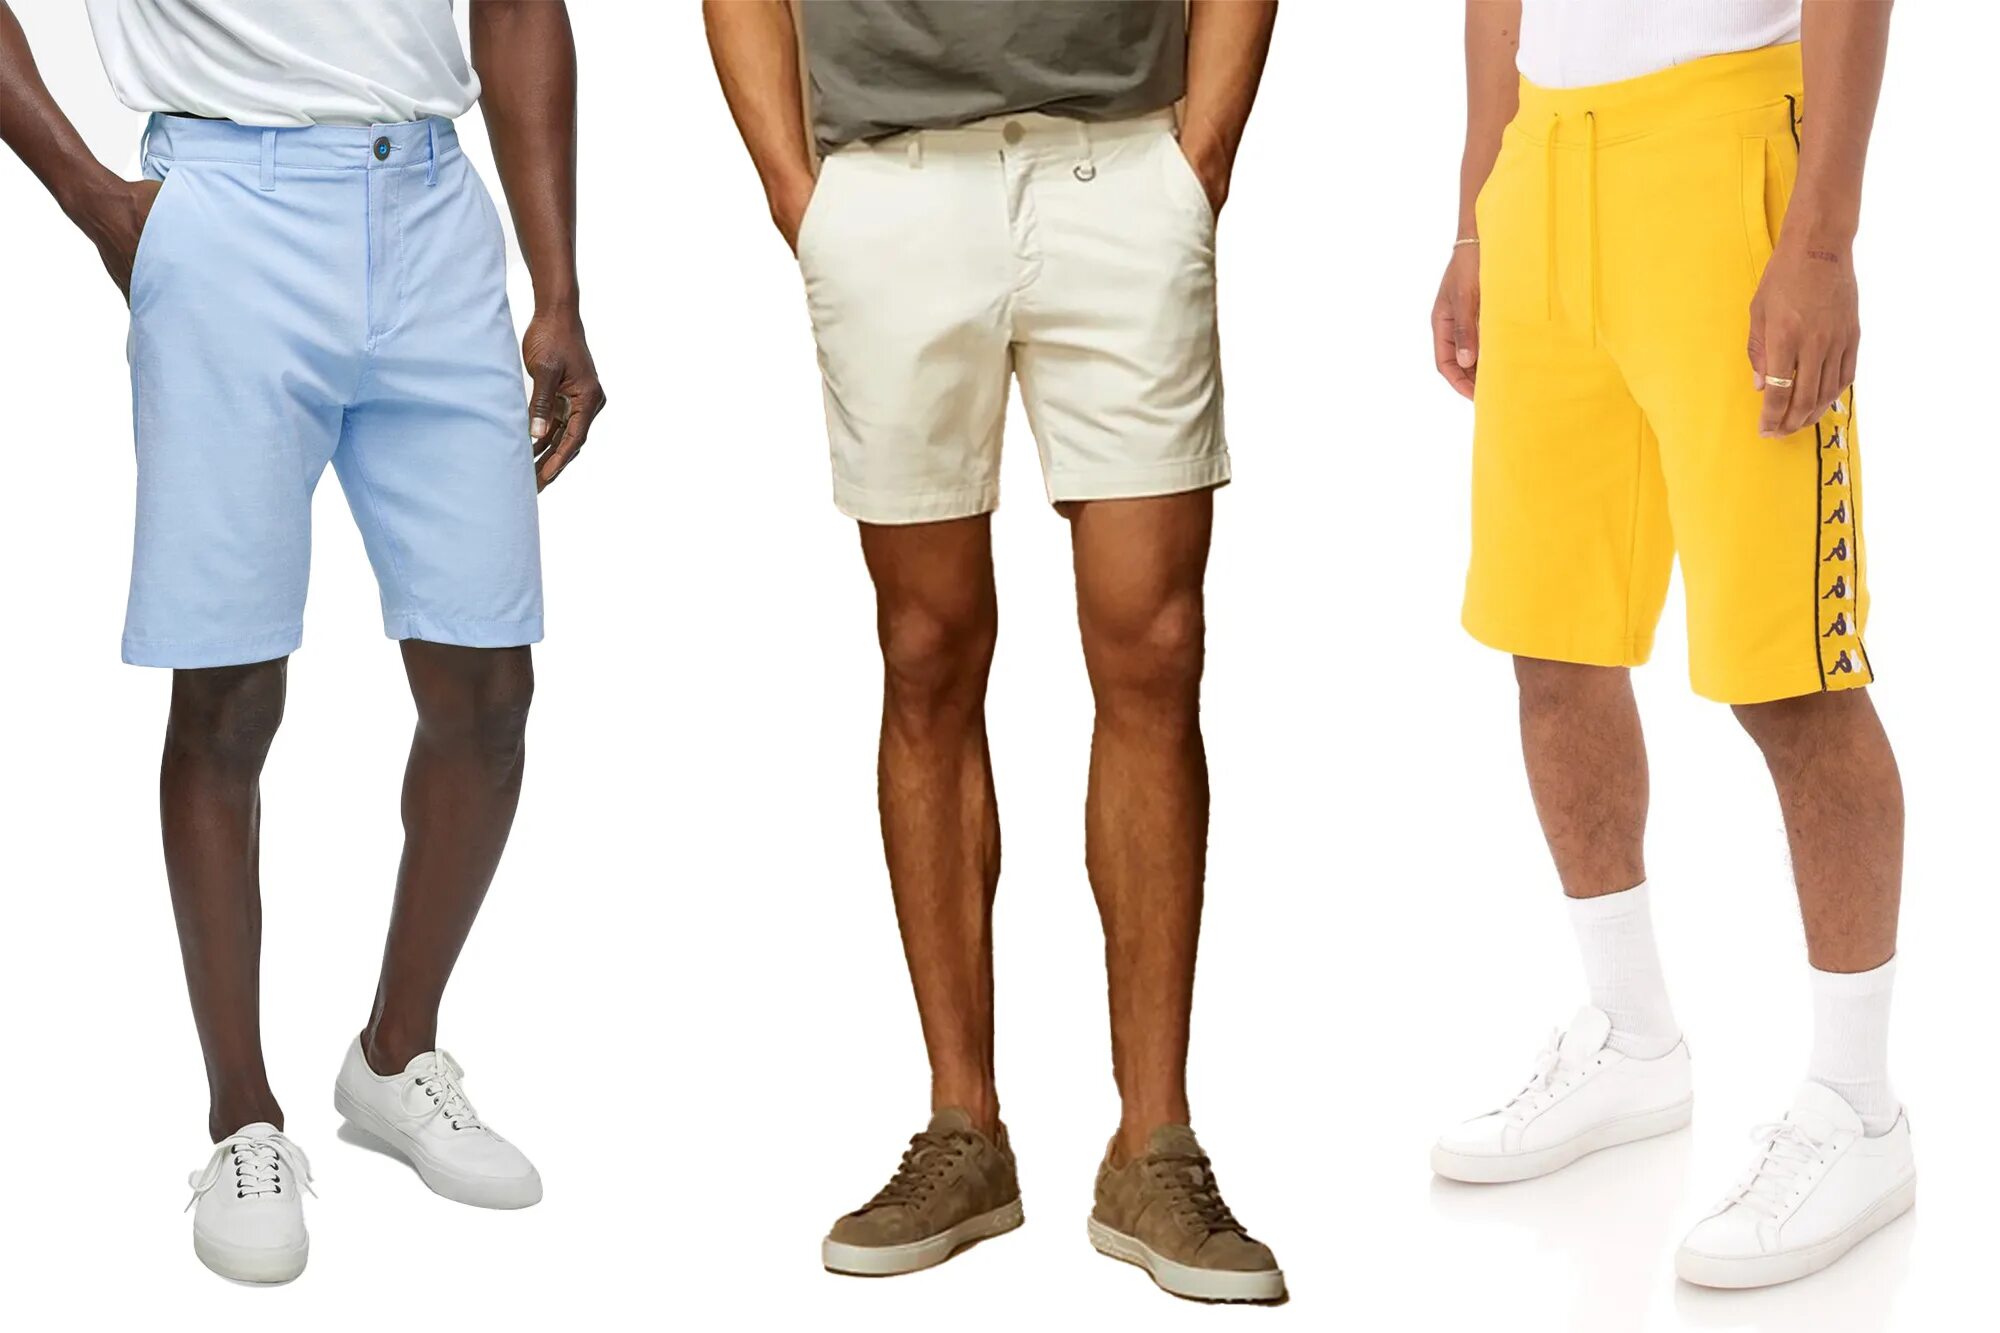 Шорты Balenciaga. Канал good shorts. Mens shorts. In extenso шорты мужские.